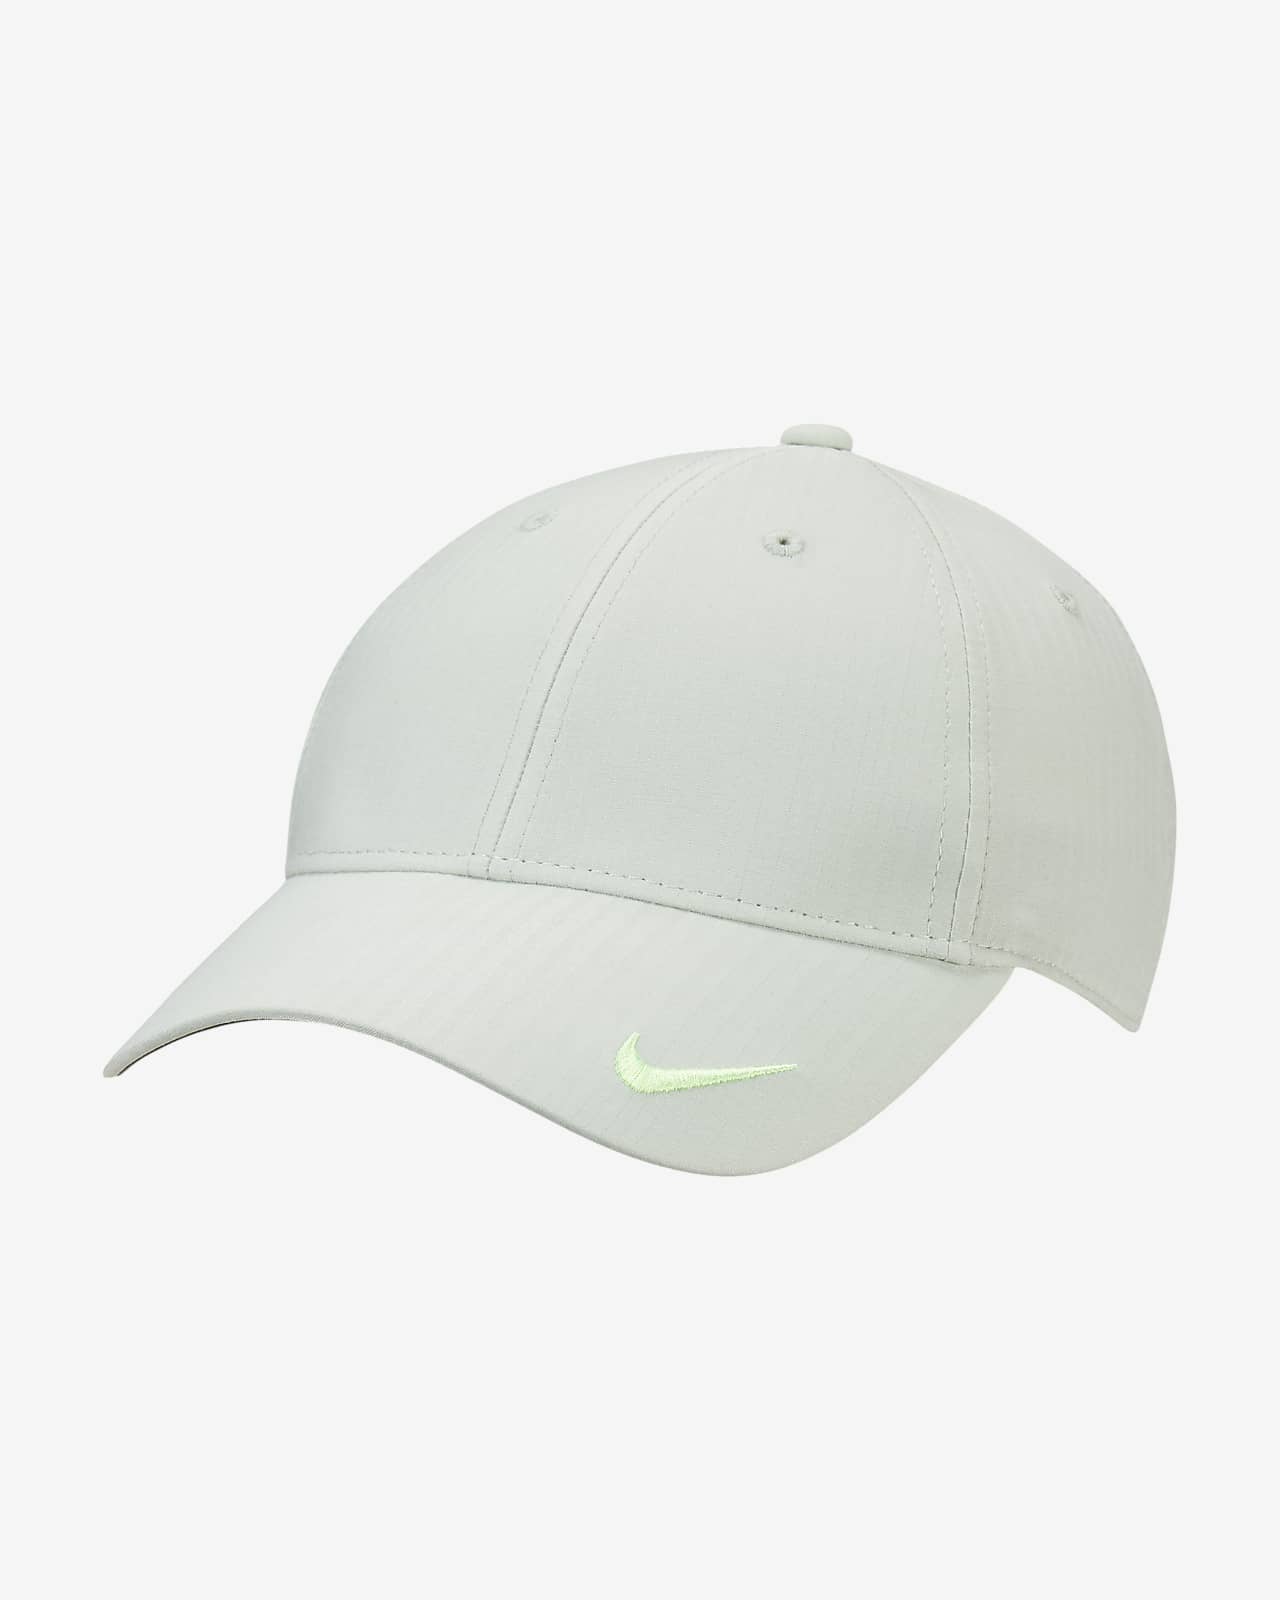 Nike Heritage86 Women's Golf Hat